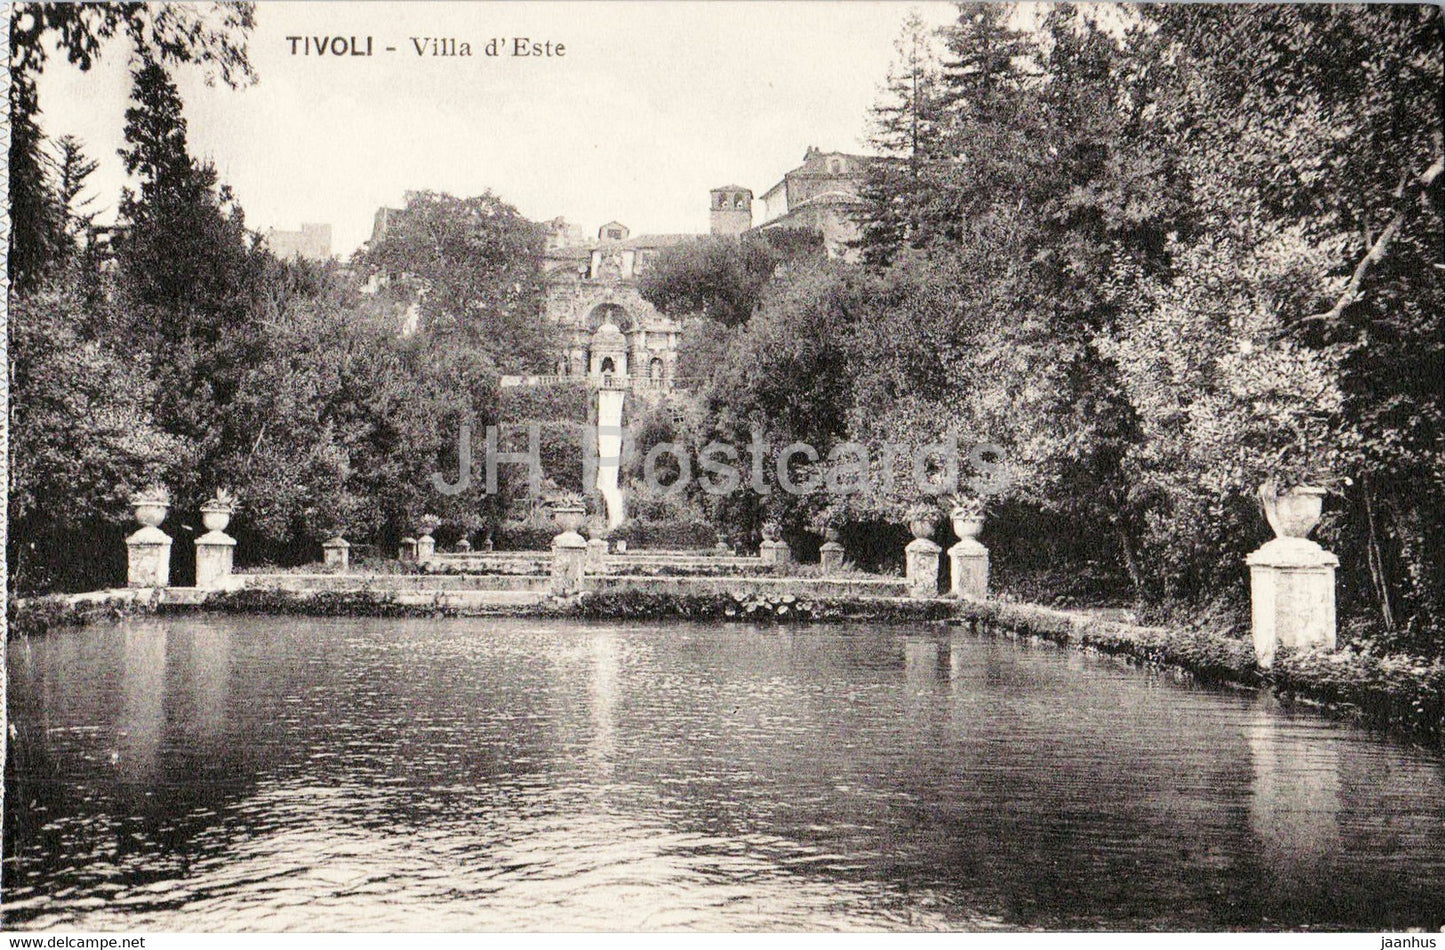 Tivoli - Villa d'Este - 196 - old postcard - Italy - unused - JH Postcards